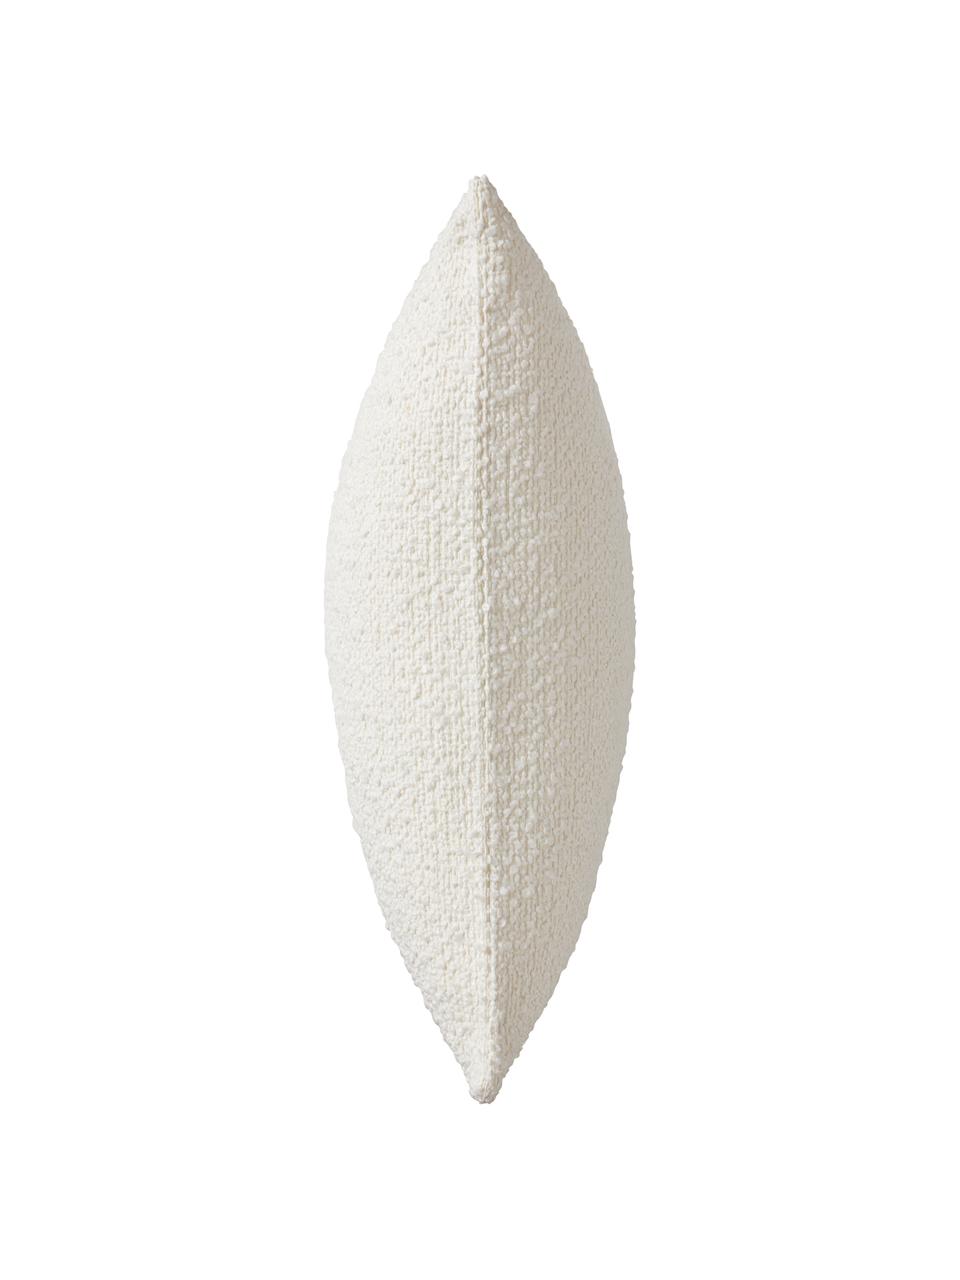 Bouclé-Kissenhülle Coda in Weiß, 97% Polyester, 3% Acryl, Weiß, B 50 x L 50 cm